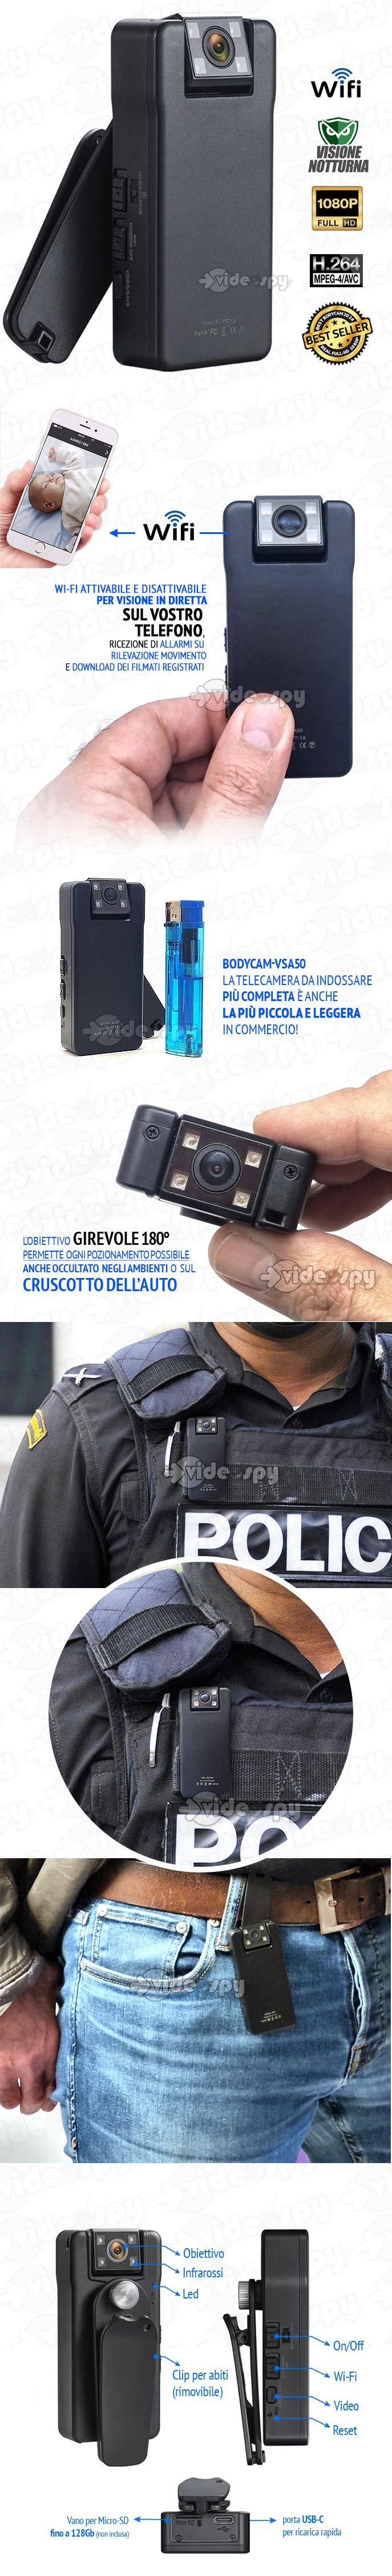 Telecamera bodycam indossabile su divisa per polizia